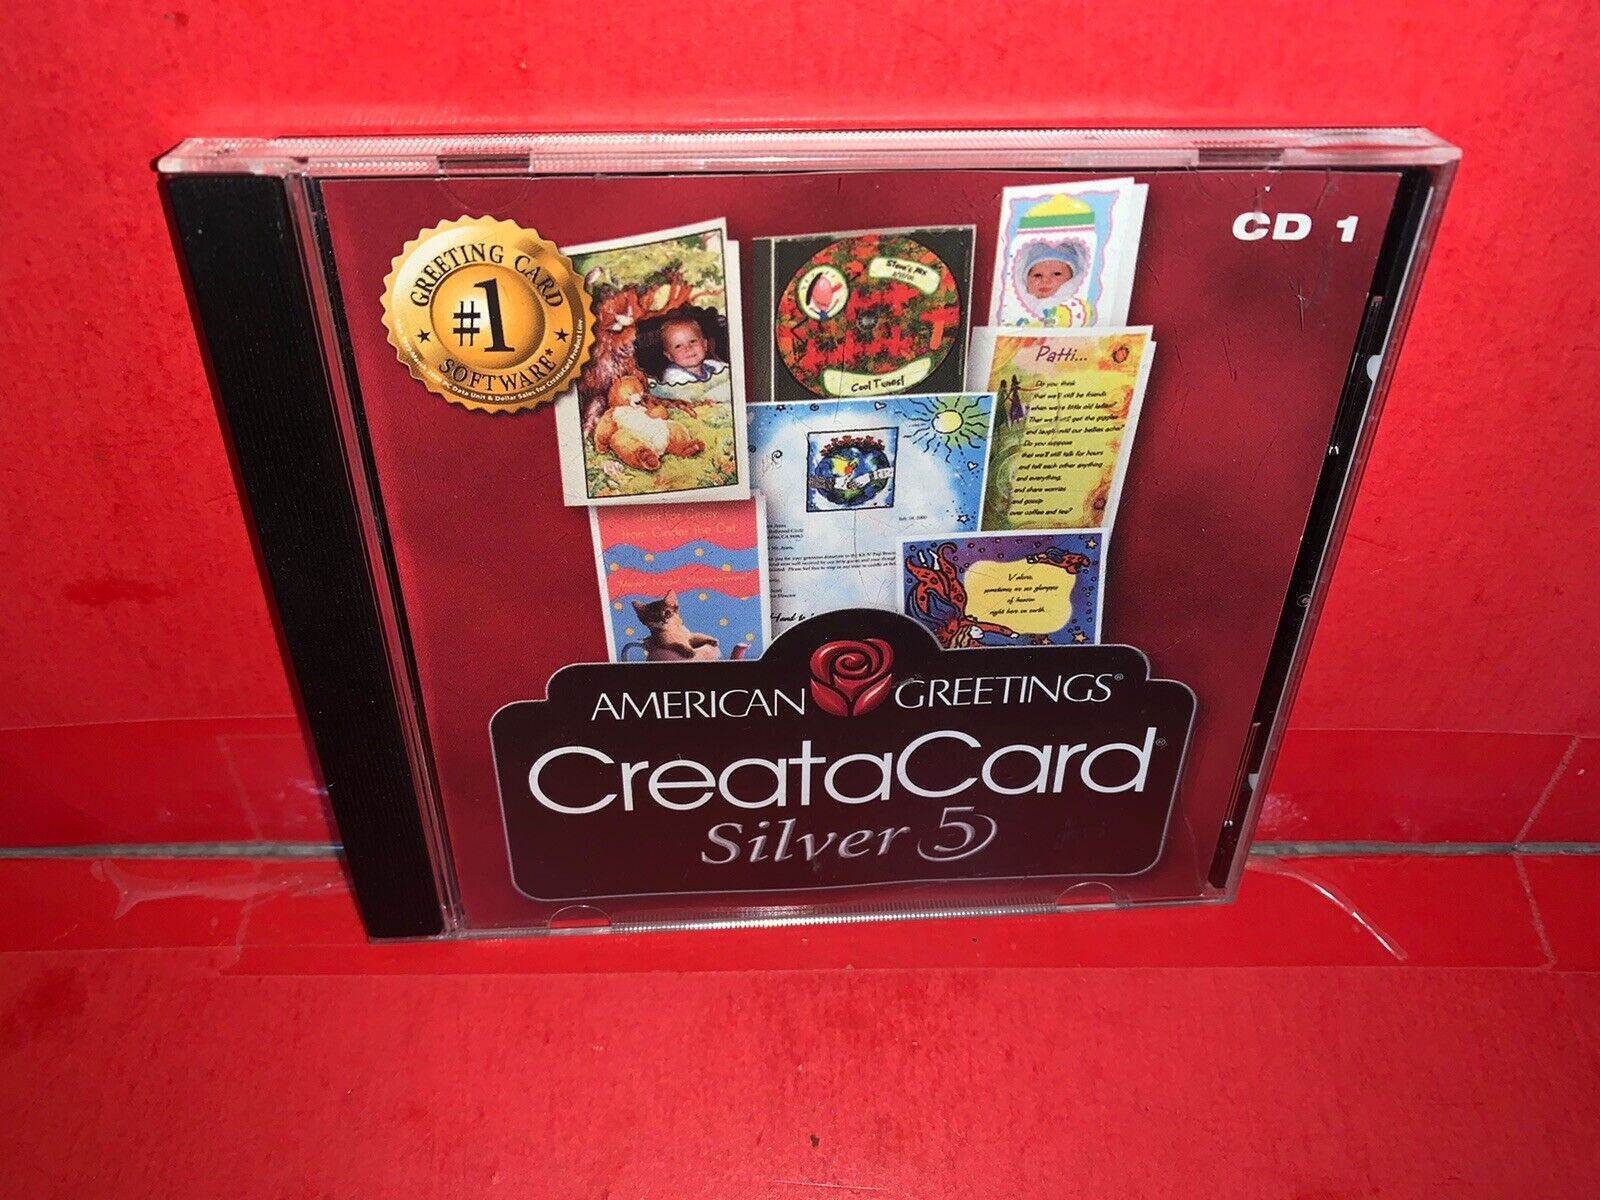 American Greeting CreataCard Silver 5 CD 1